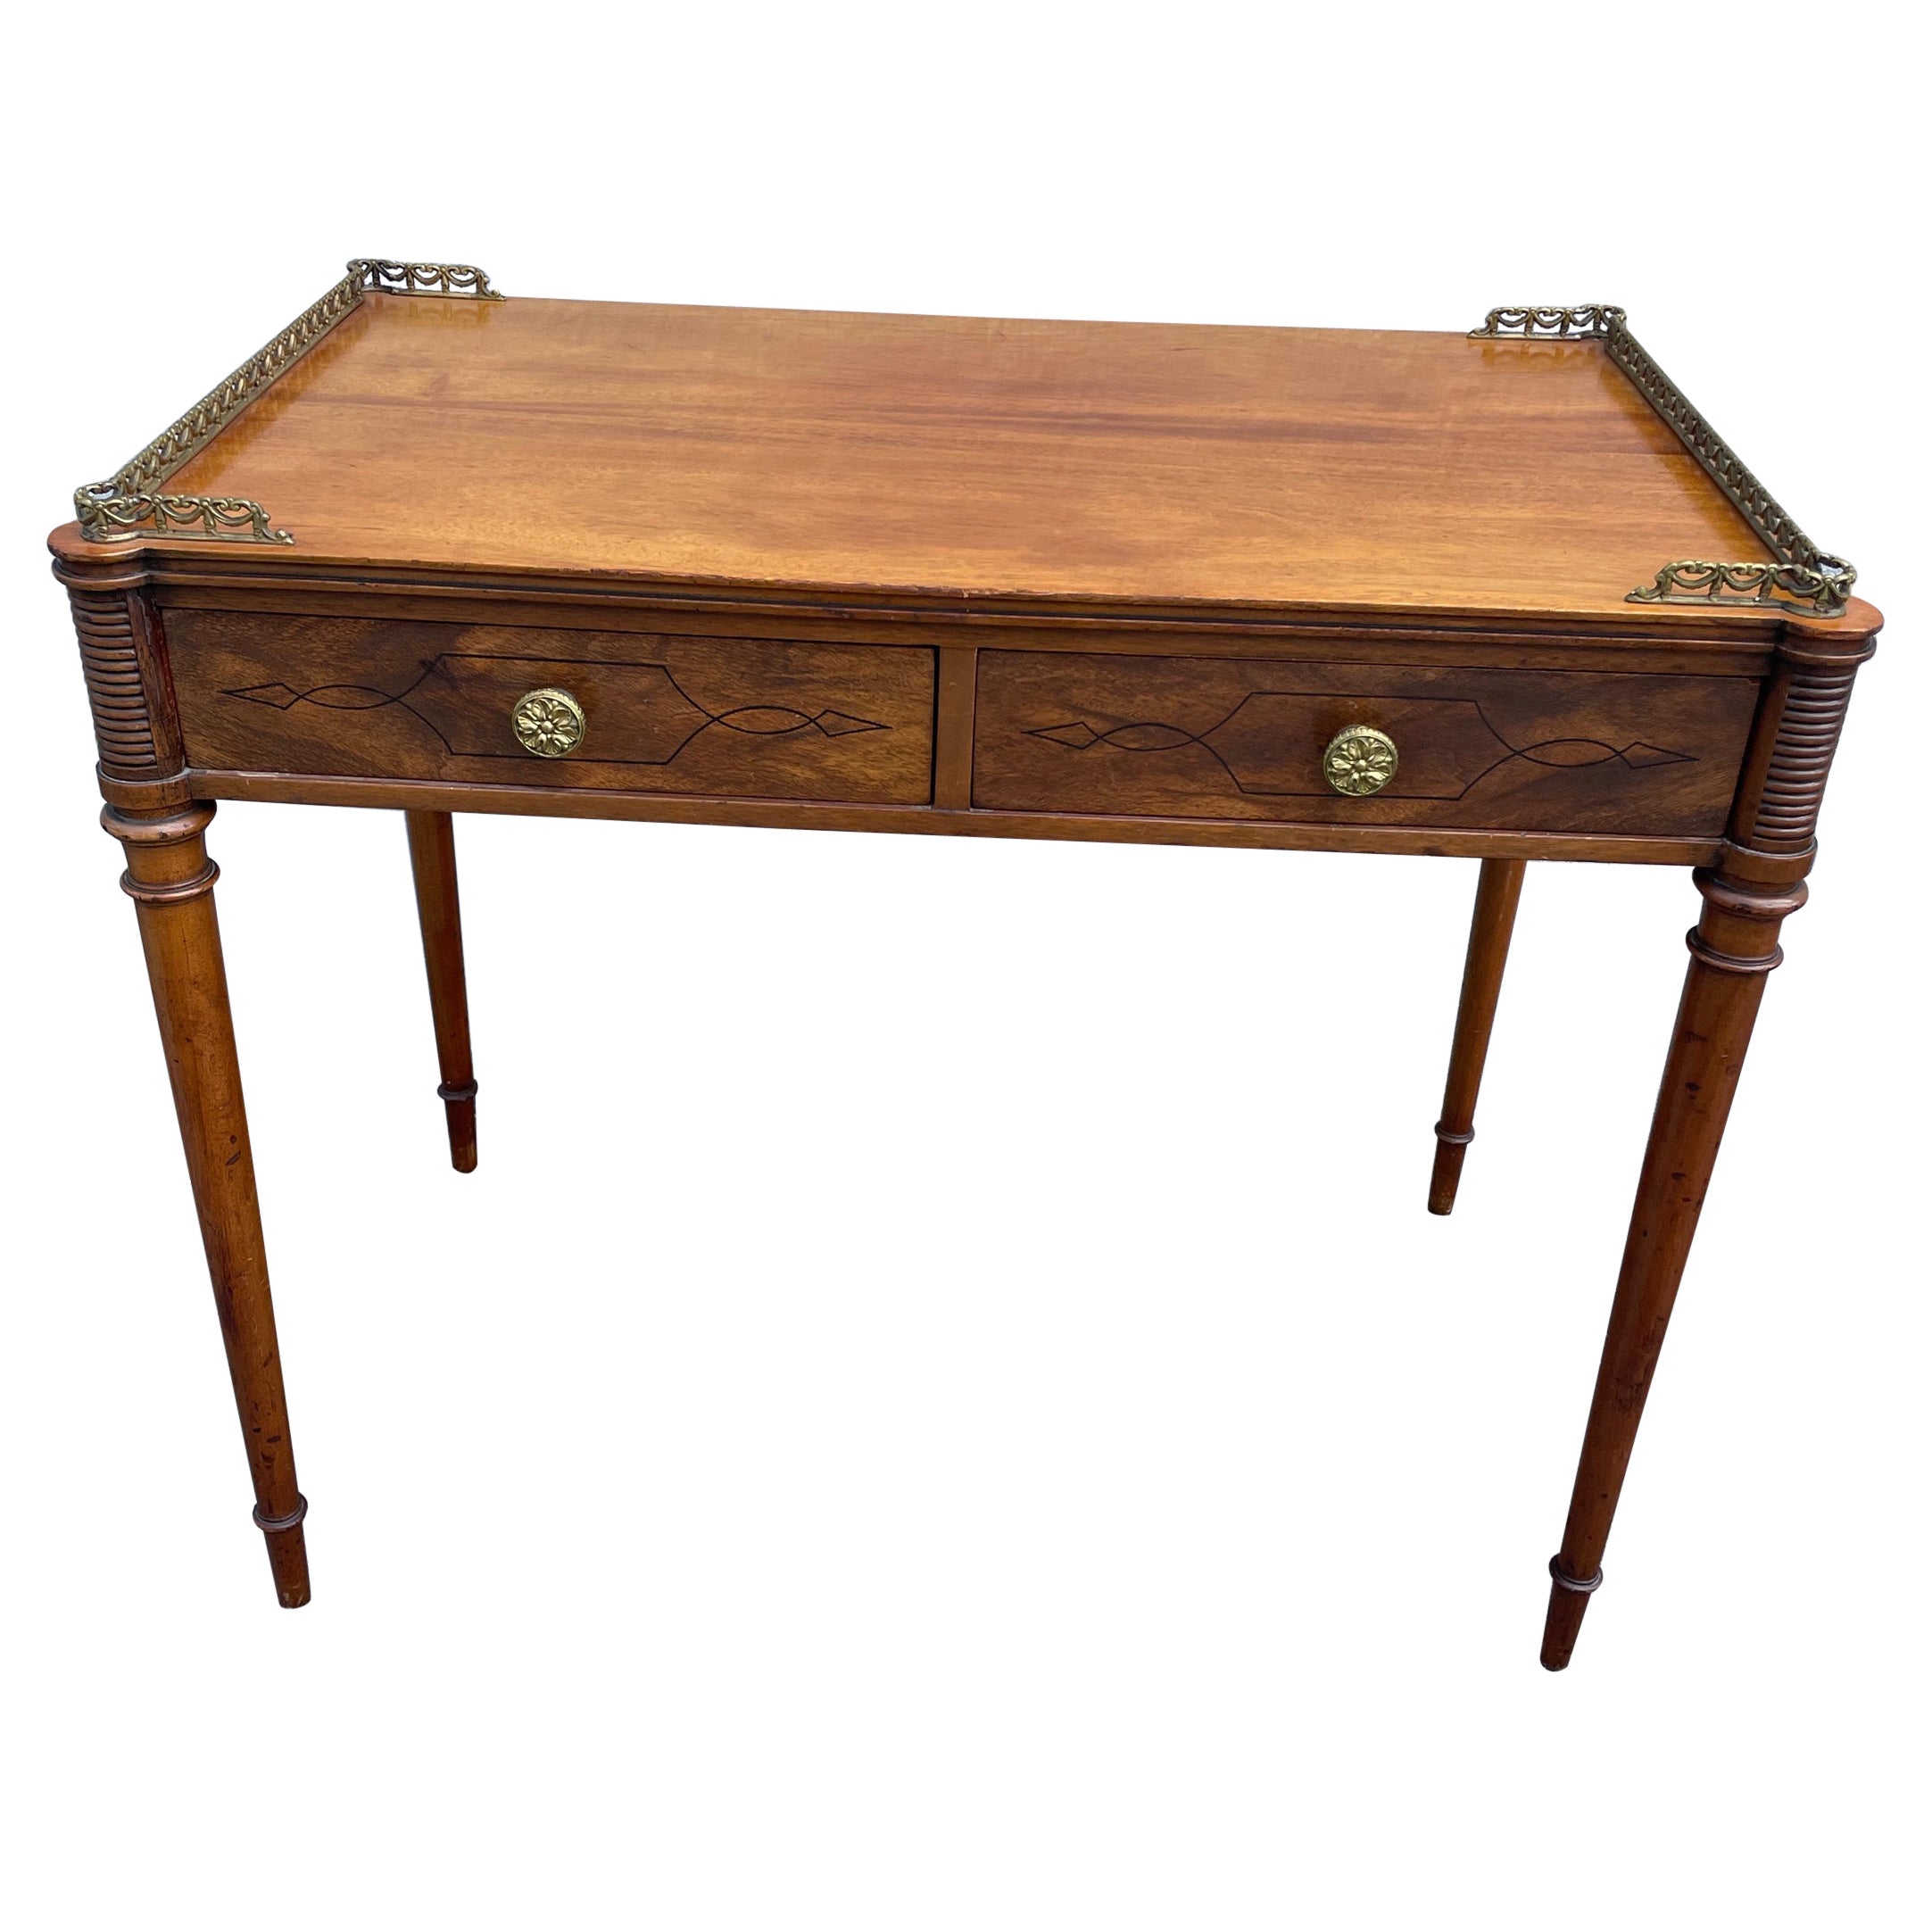 Vintage Regency Style Galleried Partners Desk / Server with Turret Corners For Sale